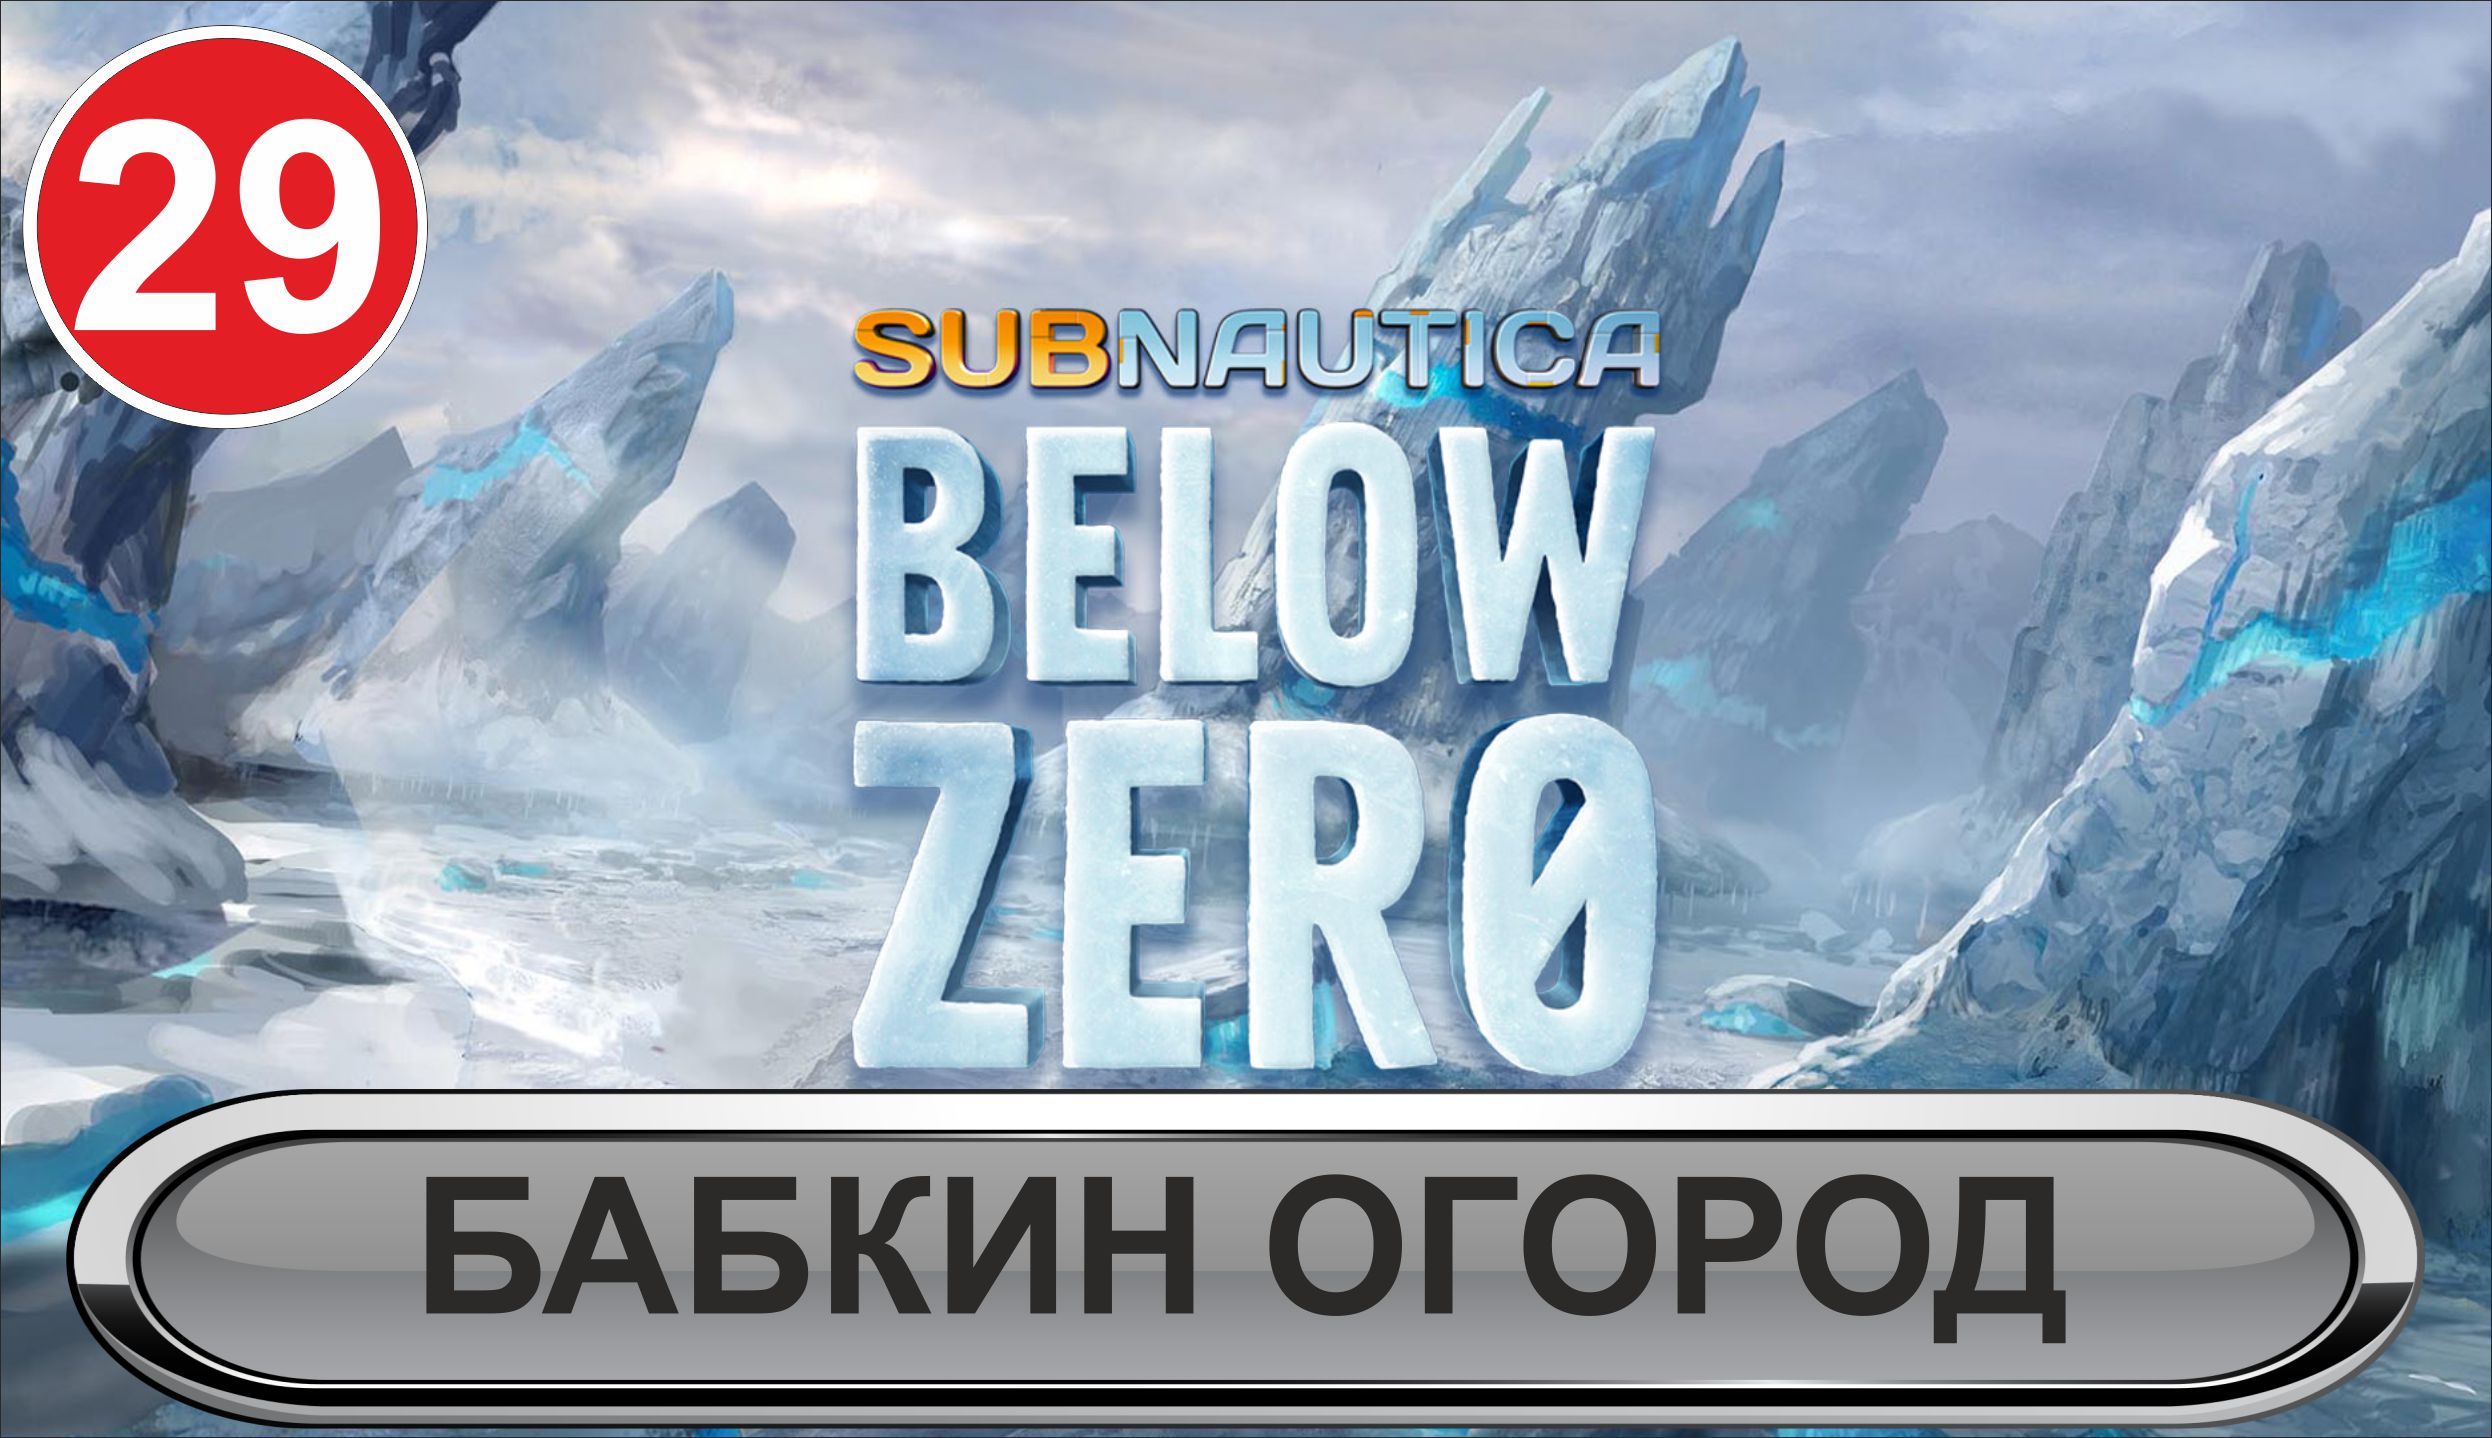 Subnautica: Below Zero - Бабкин огород